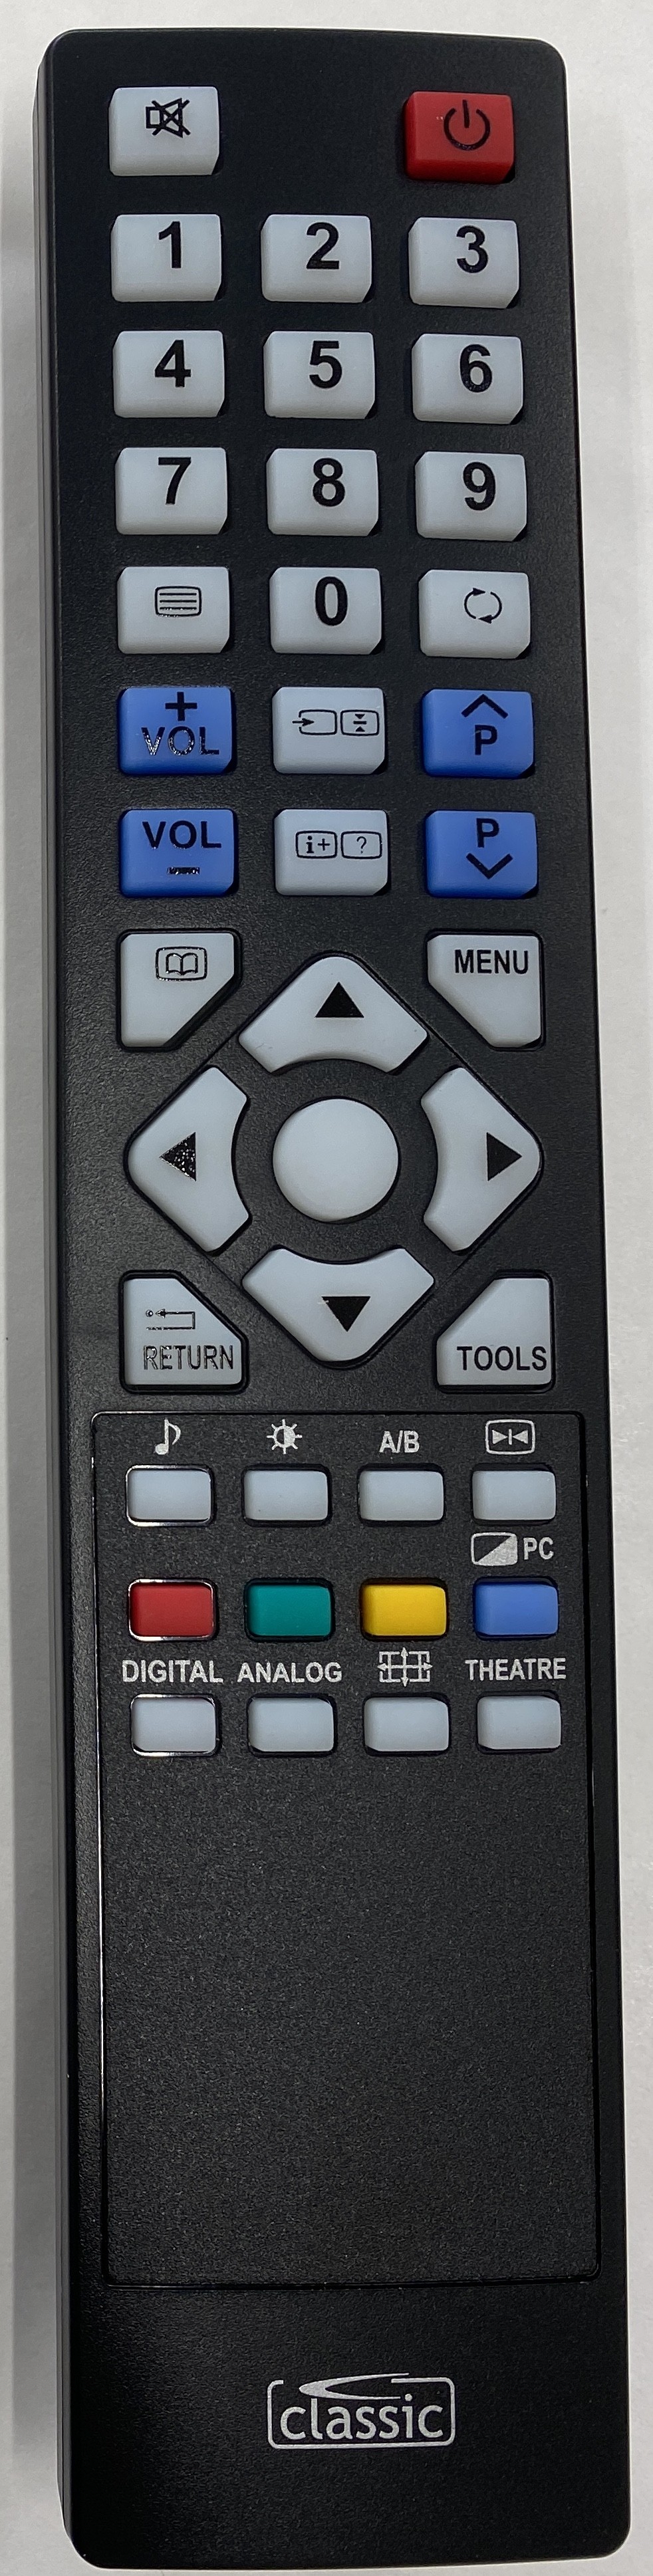 SONY RMED007 Remote Control Alternative